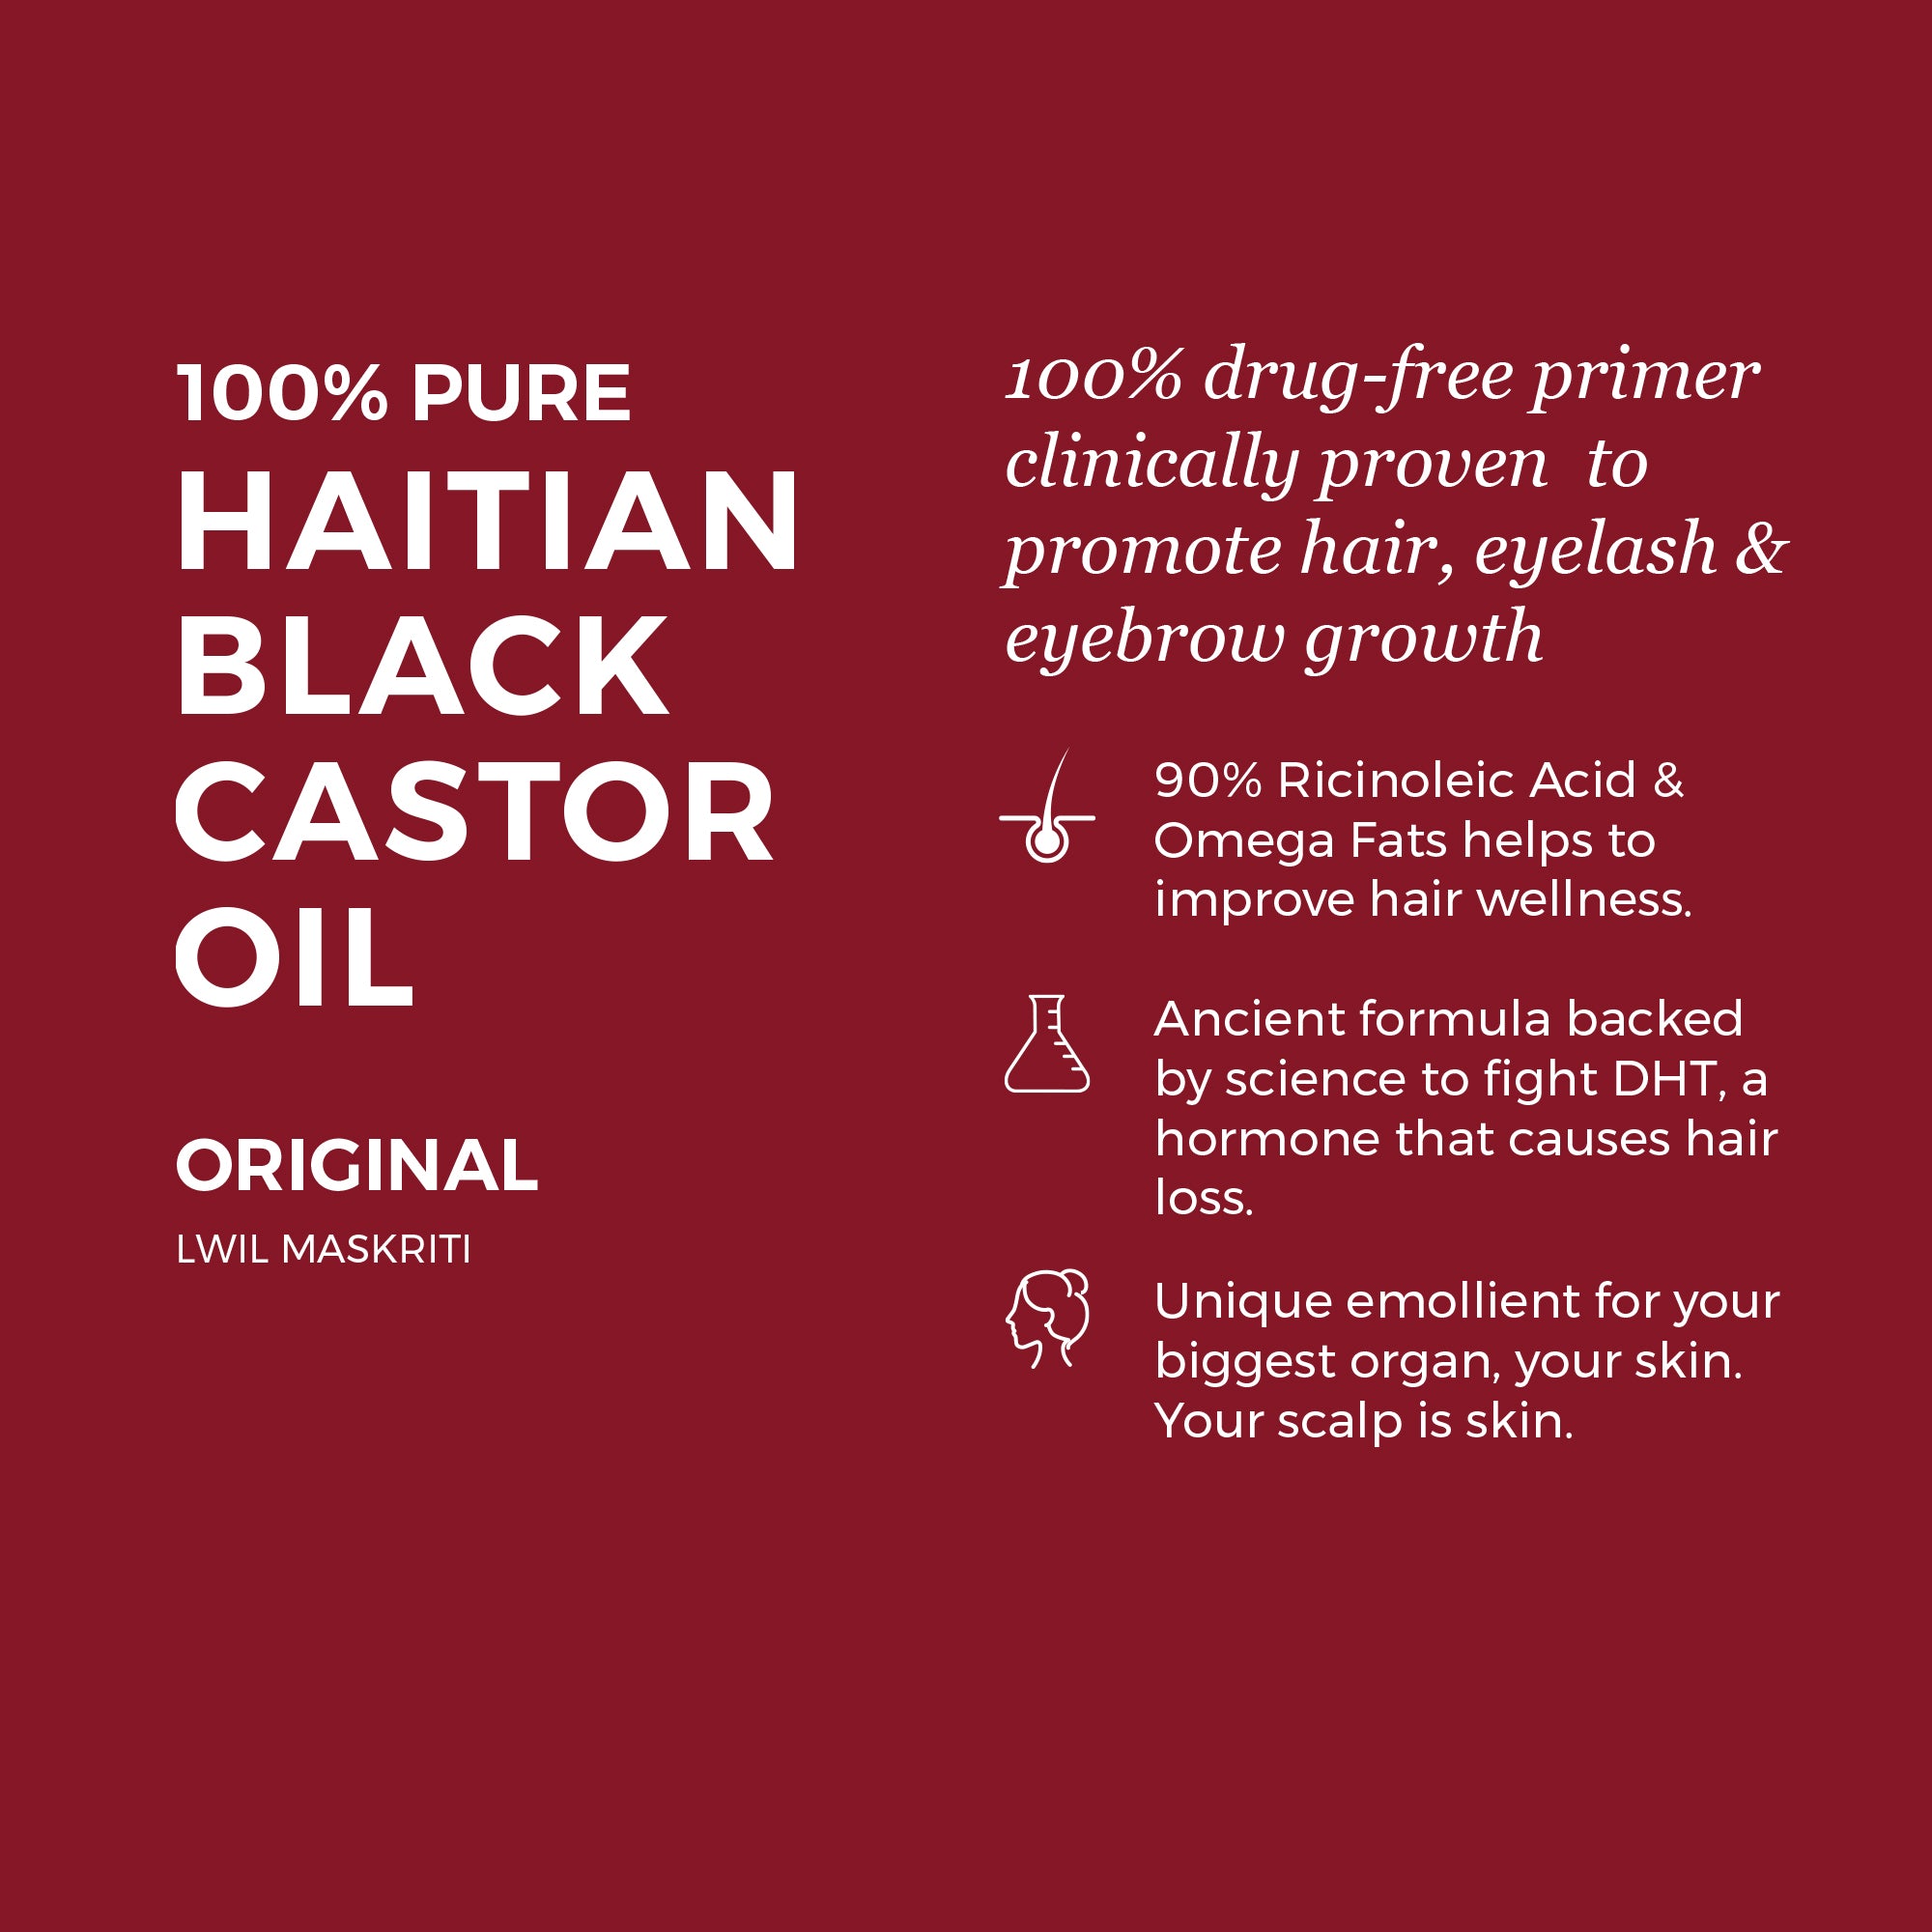 Haitian Black Castor Oil: Original (2oz)